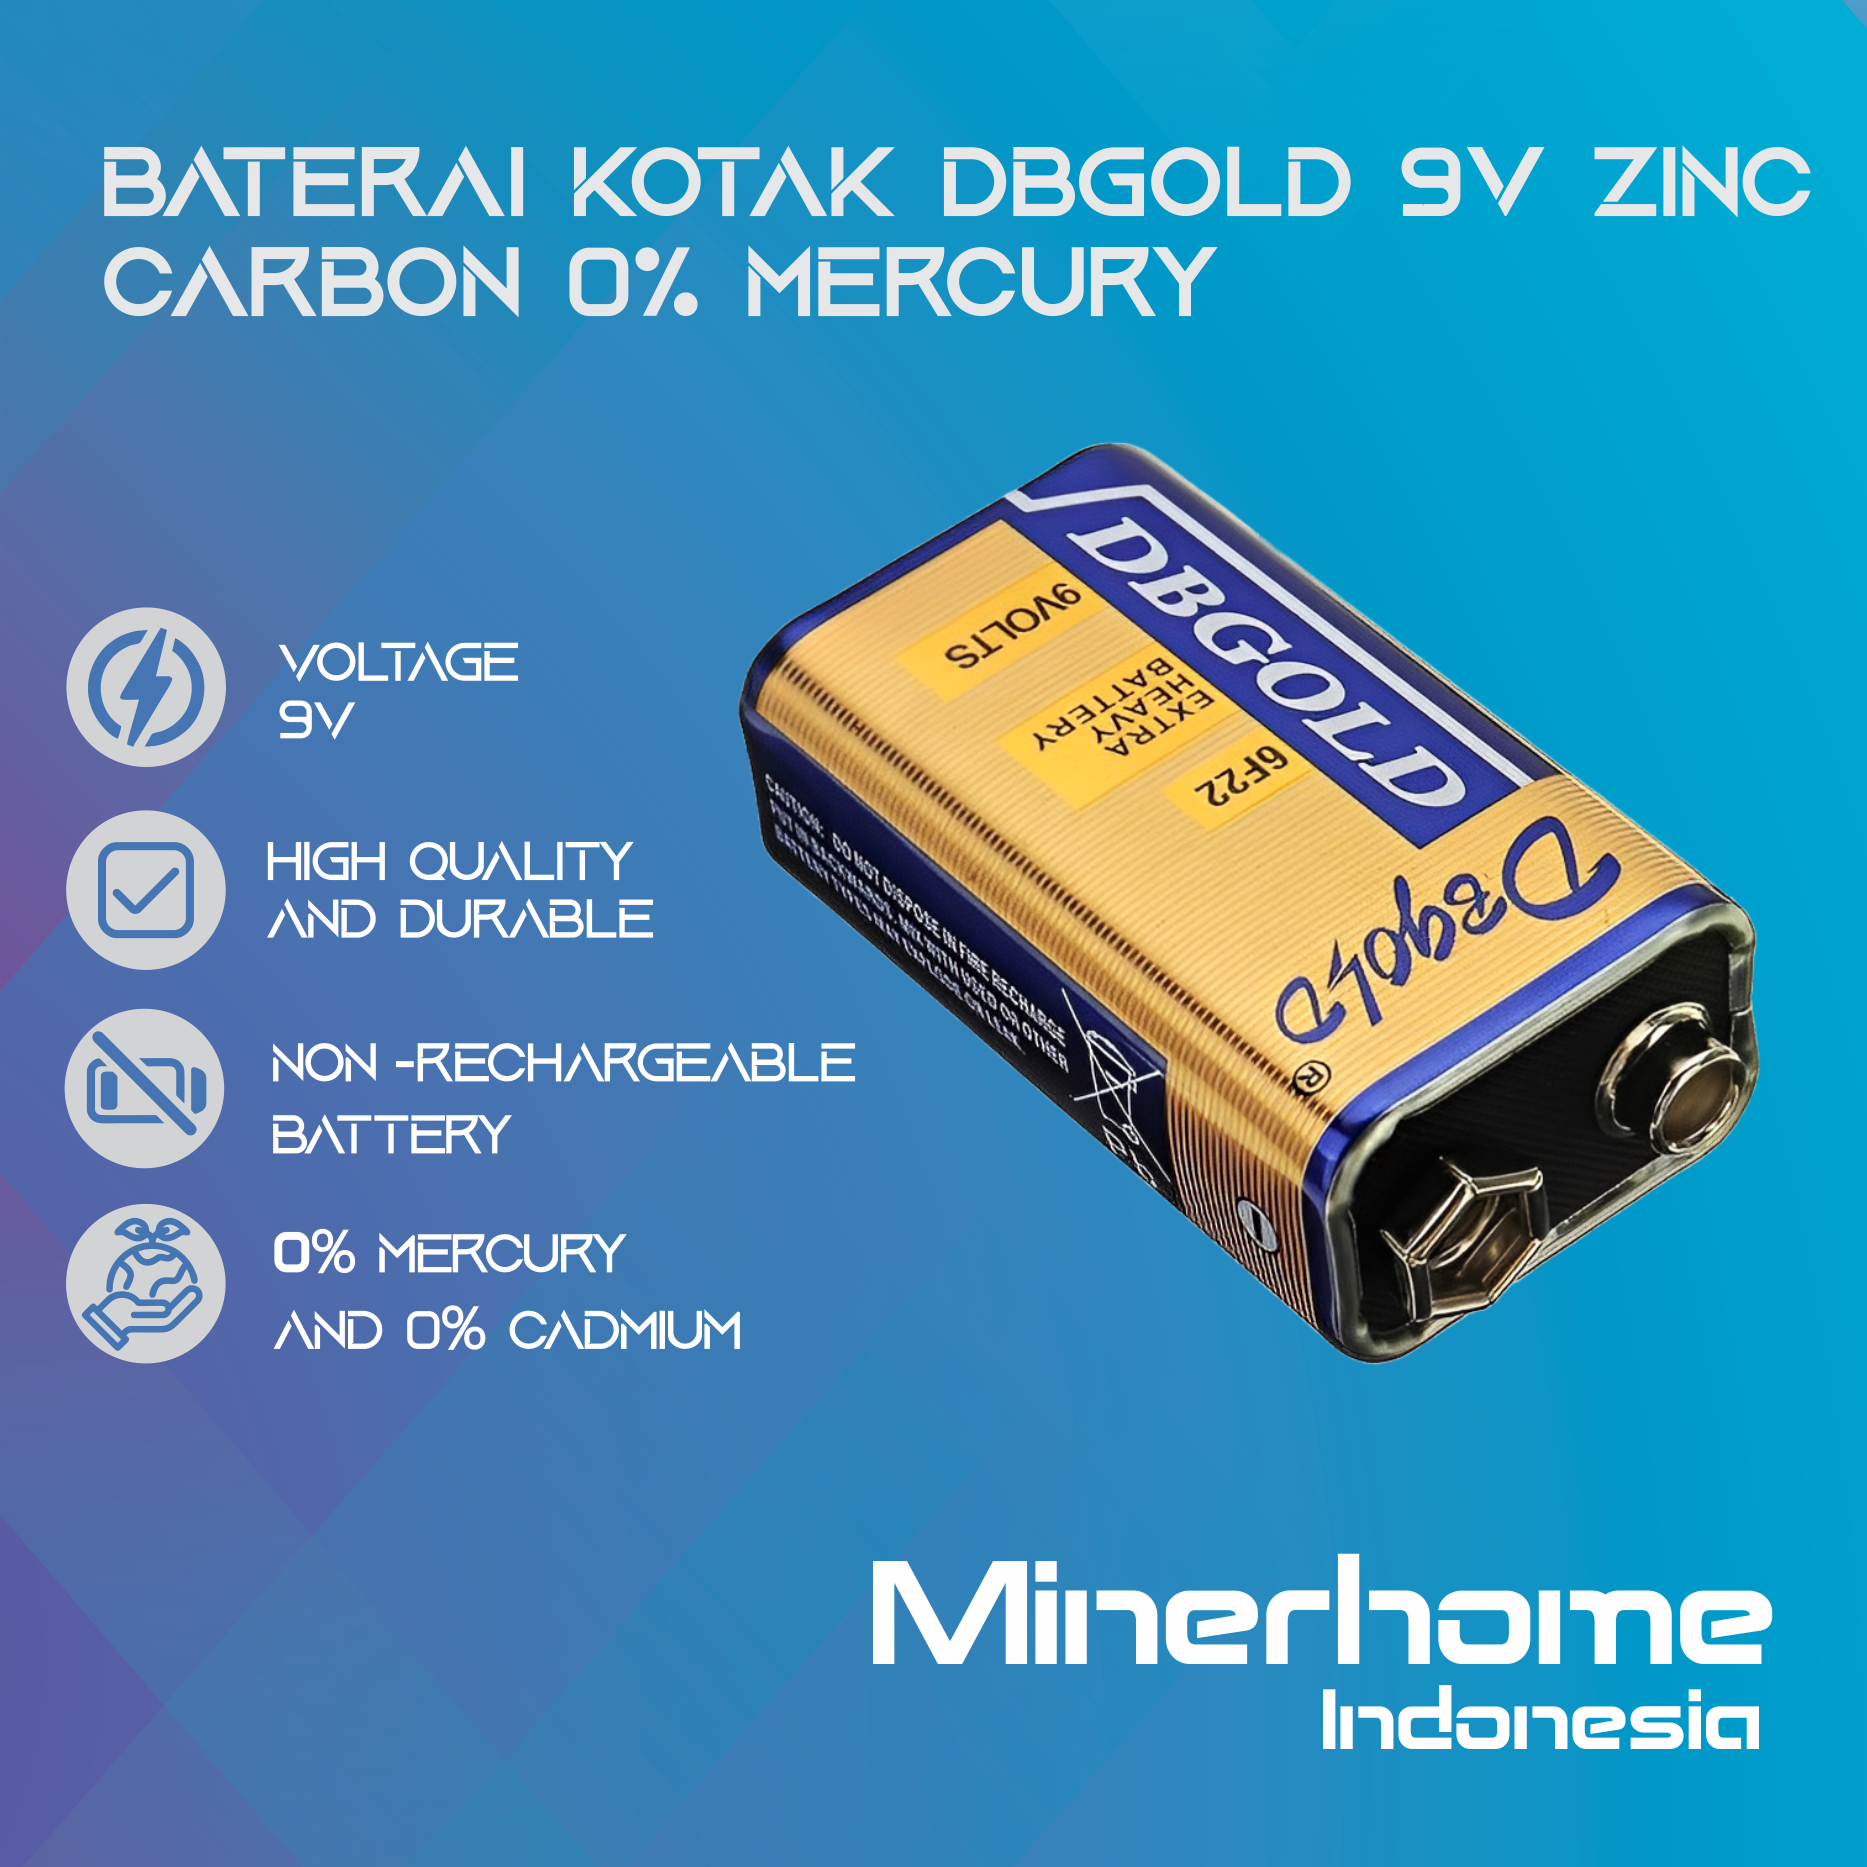 Baterai Kotak DBGOLD 9V Zinc Carbon 0% Mercury